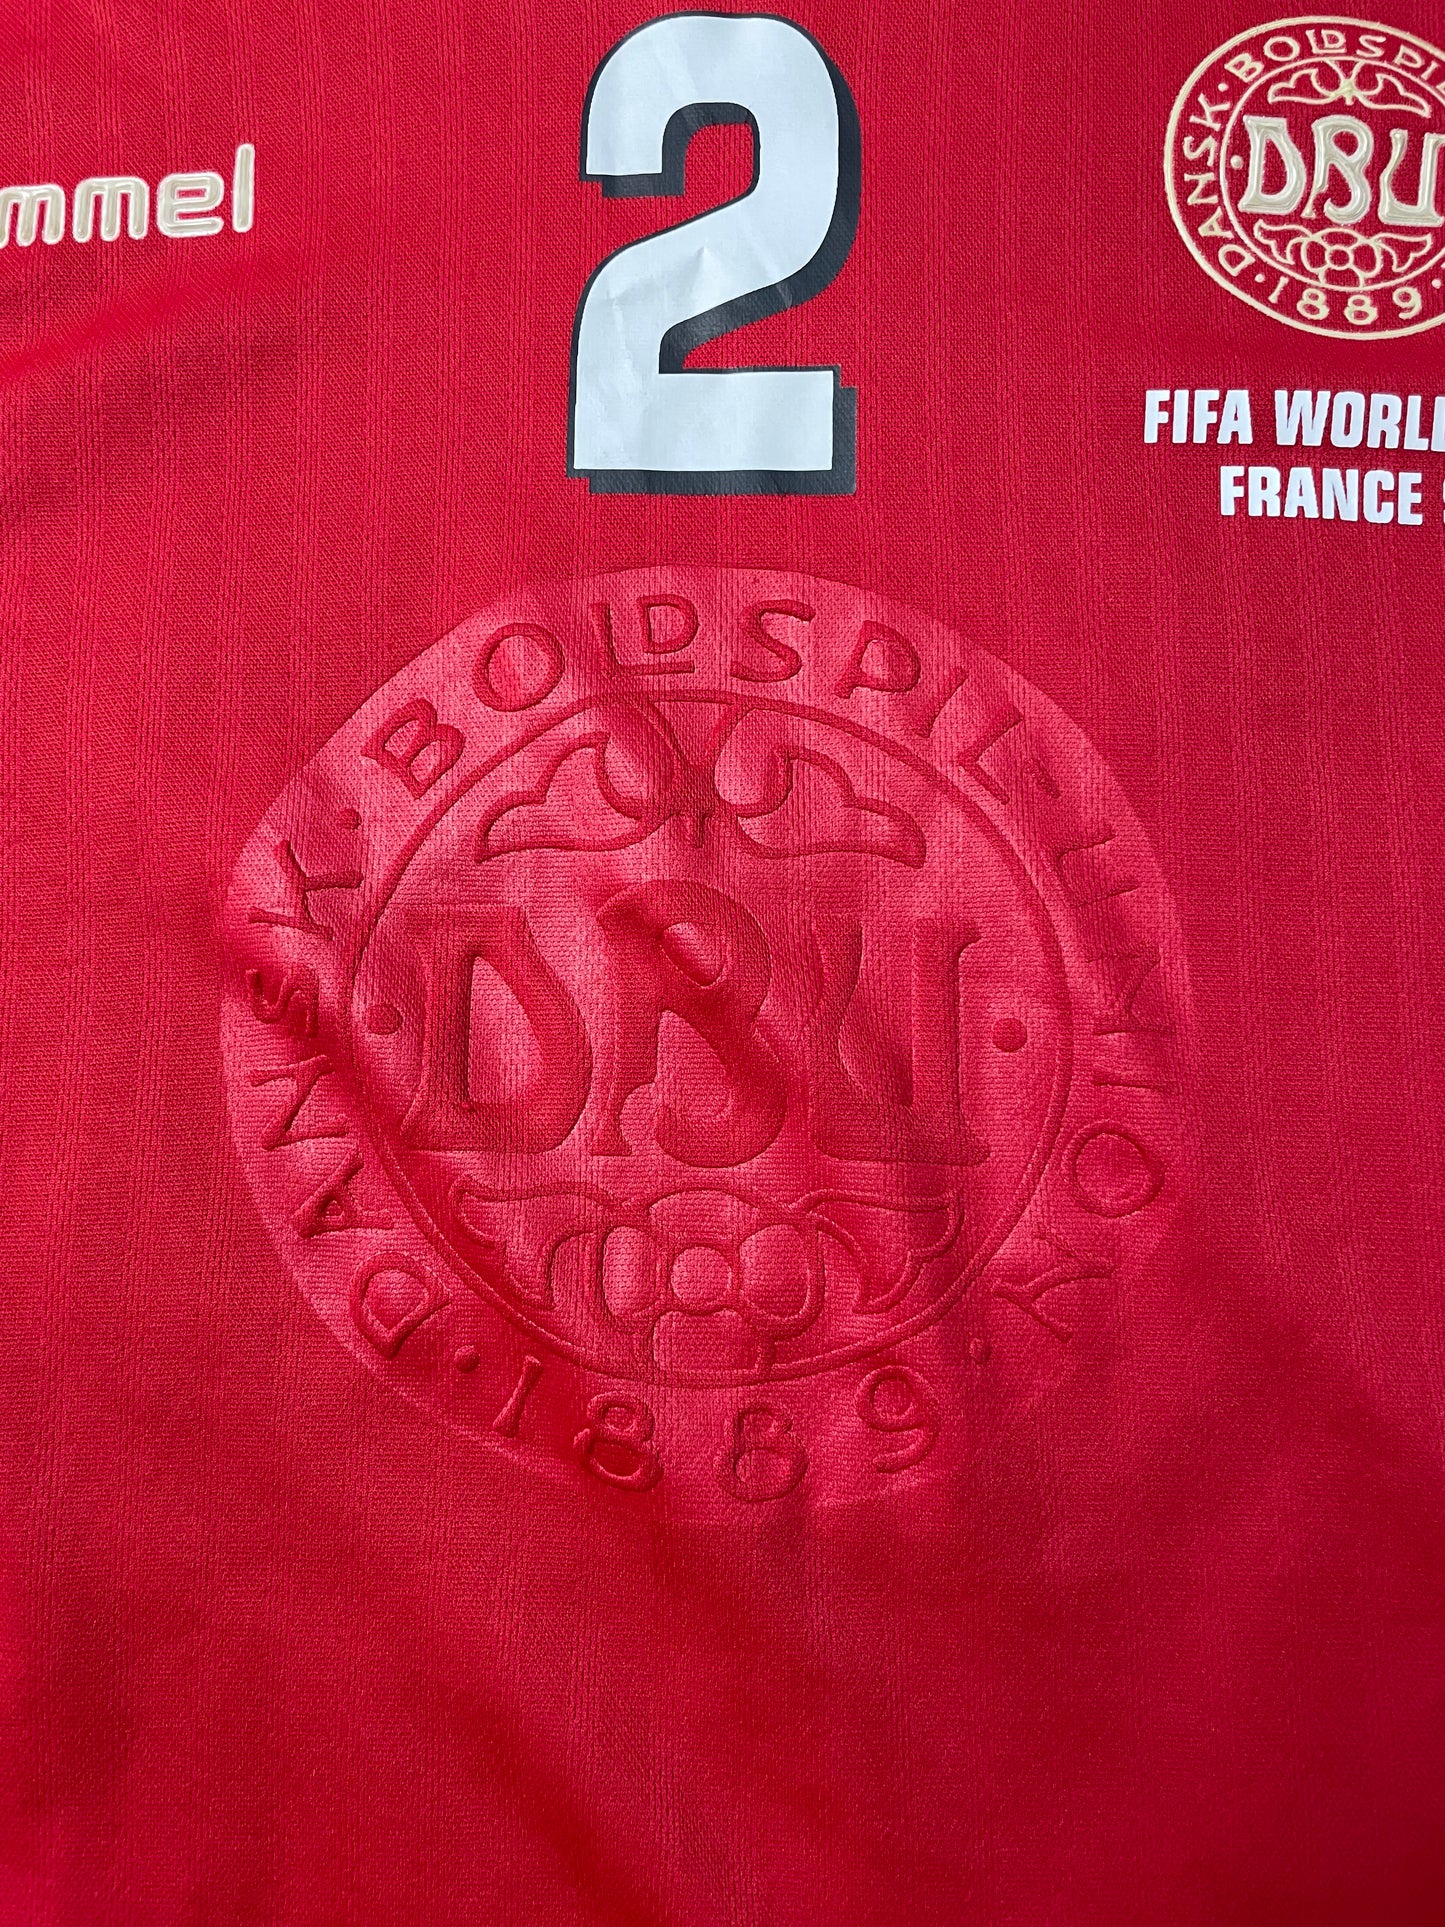 1998 Denmark Match Issue World Cup Home Shirt